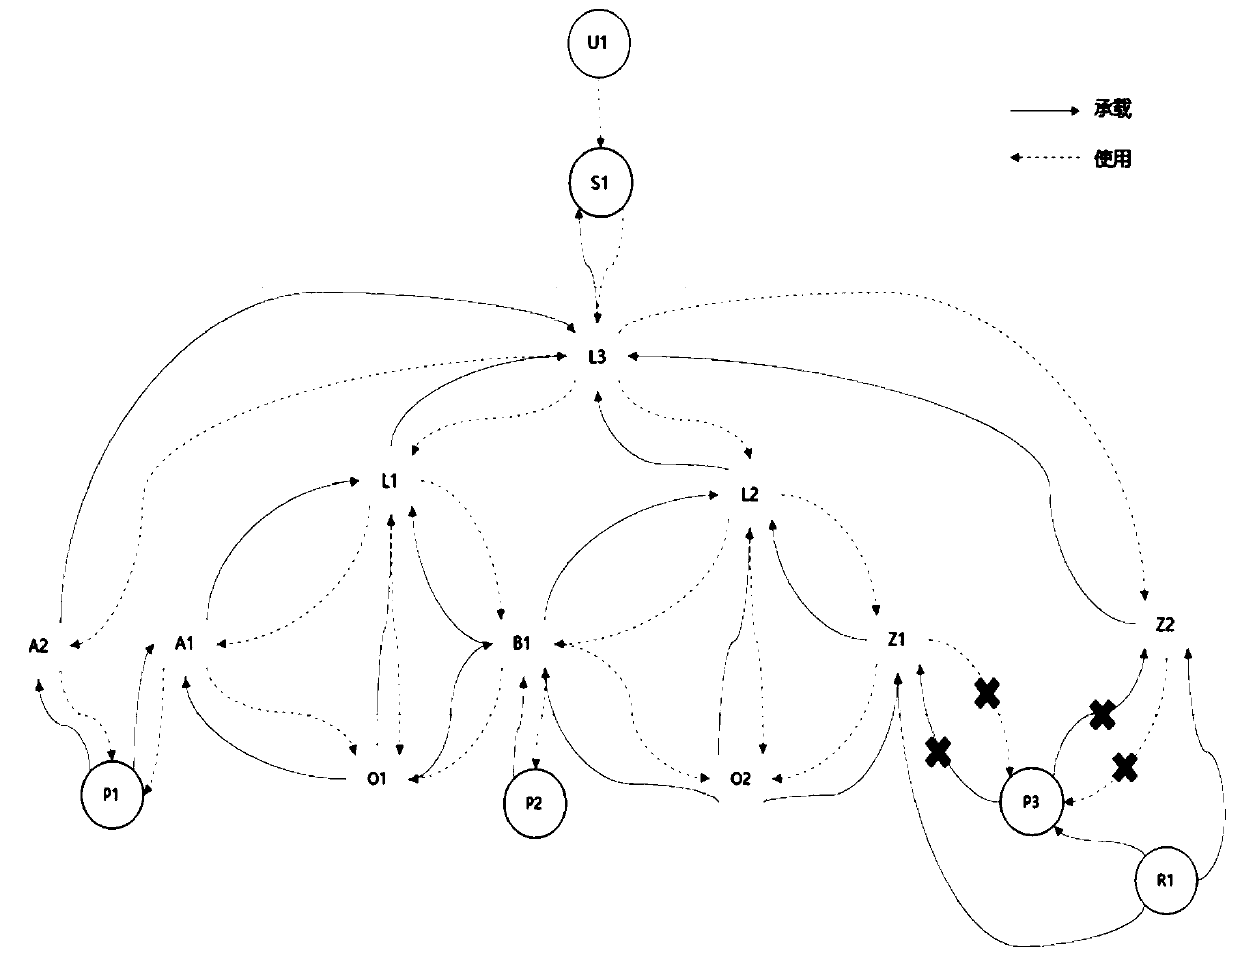 Alarm correlation analysis method based on a graph data model